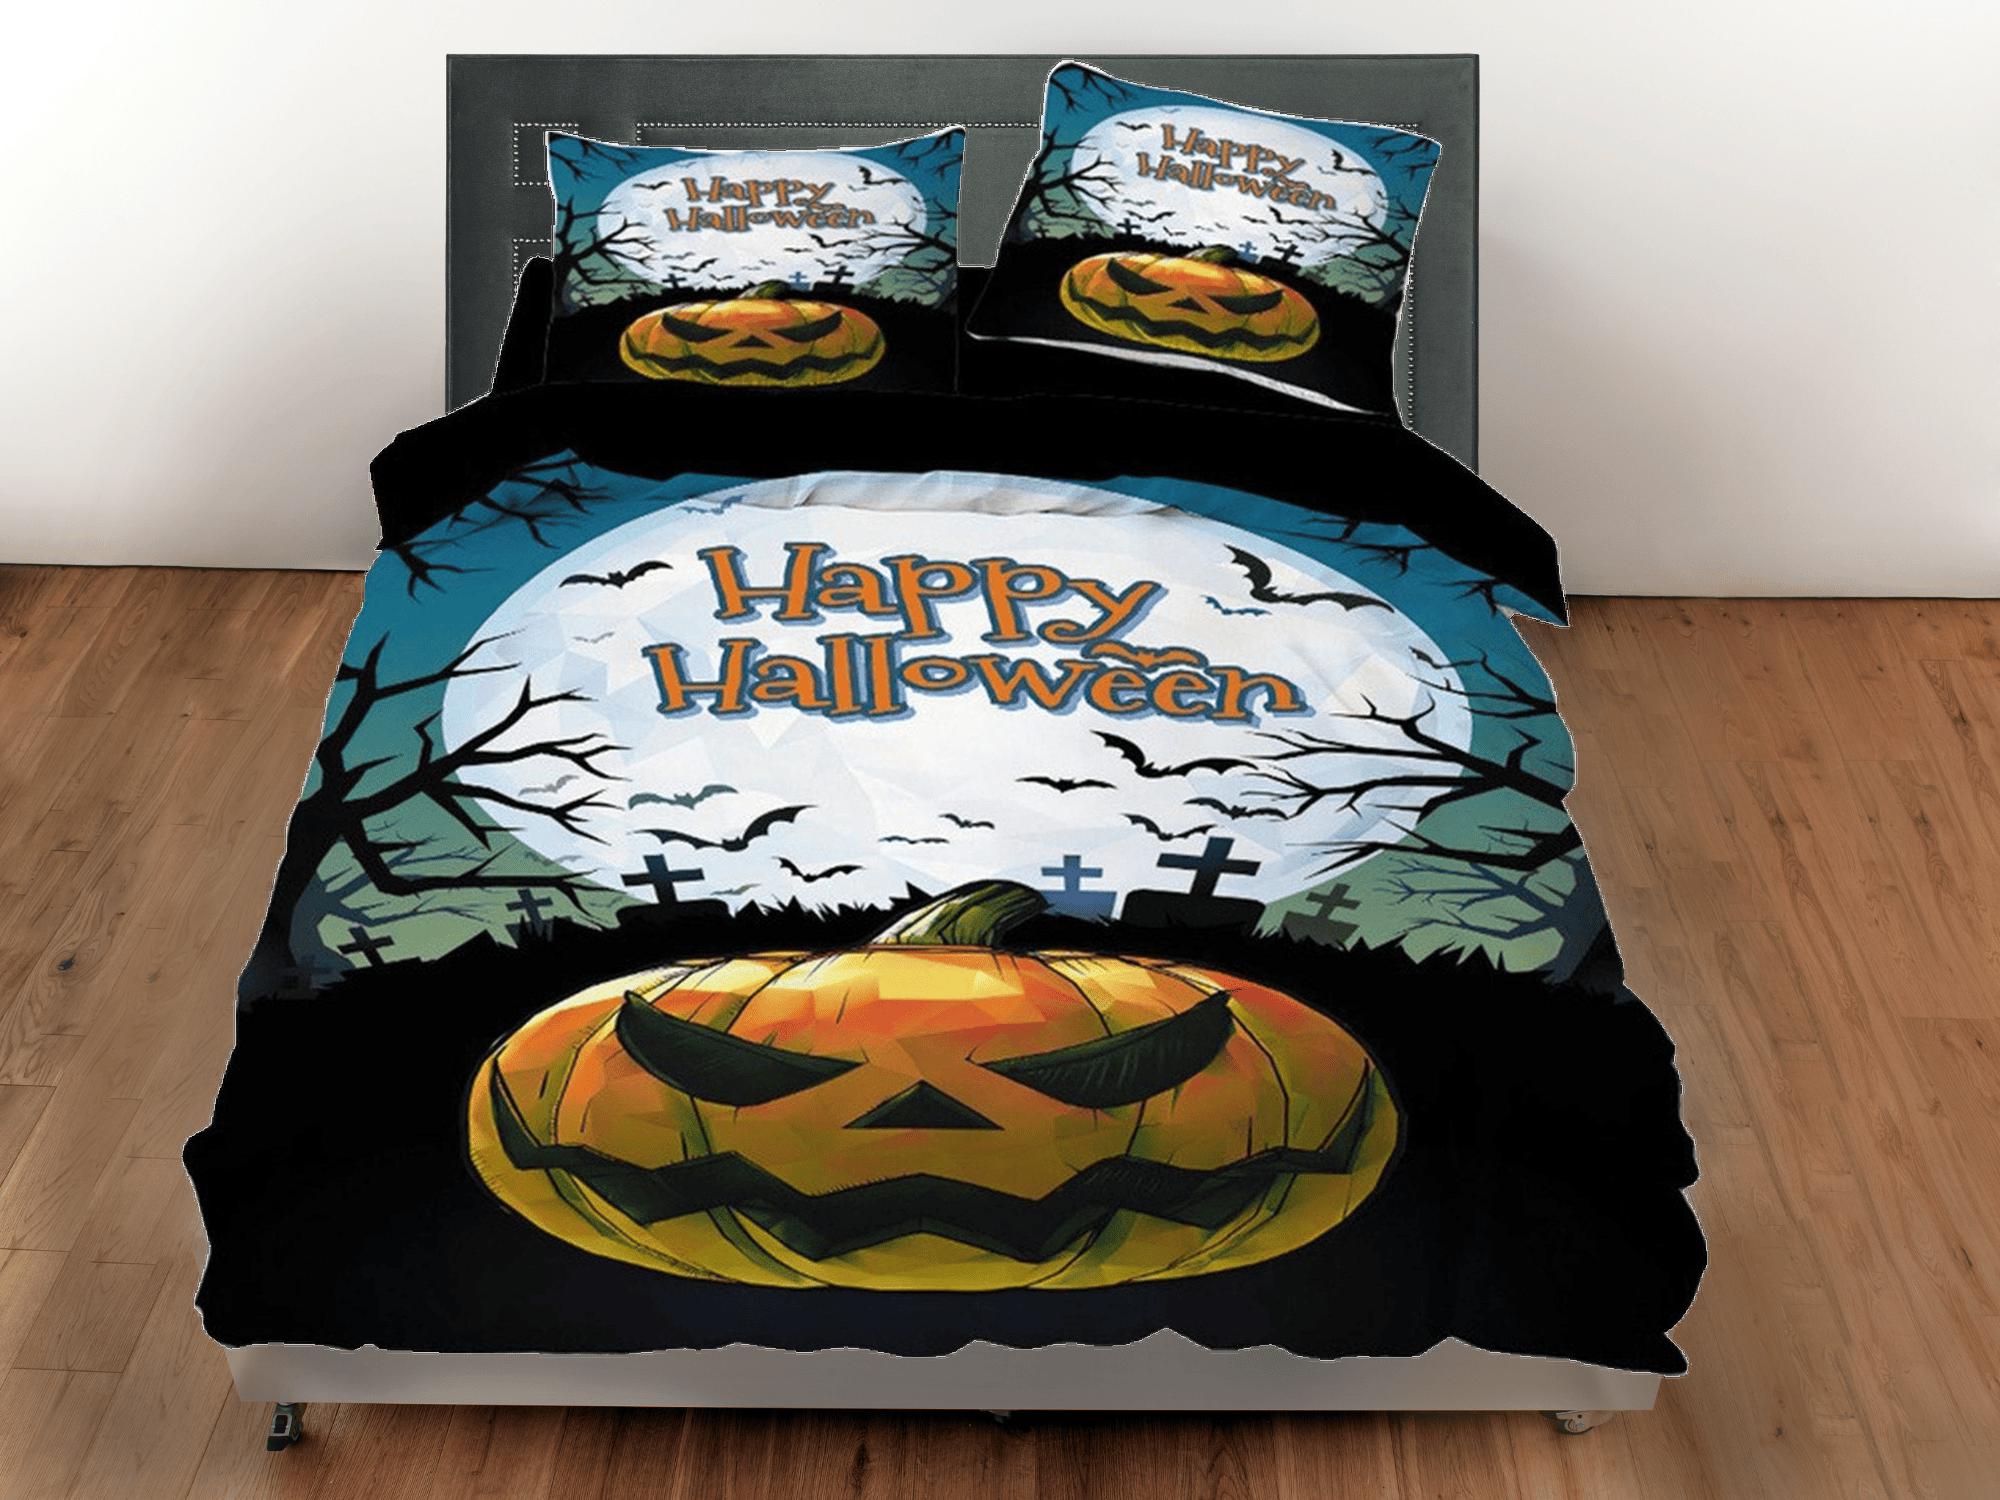 daintyduvet Happy halloween full moon graveyard pumpkin bedding & pillowcase, duvet cover set dorm bedding, nursery toddler bedding, halloween gift